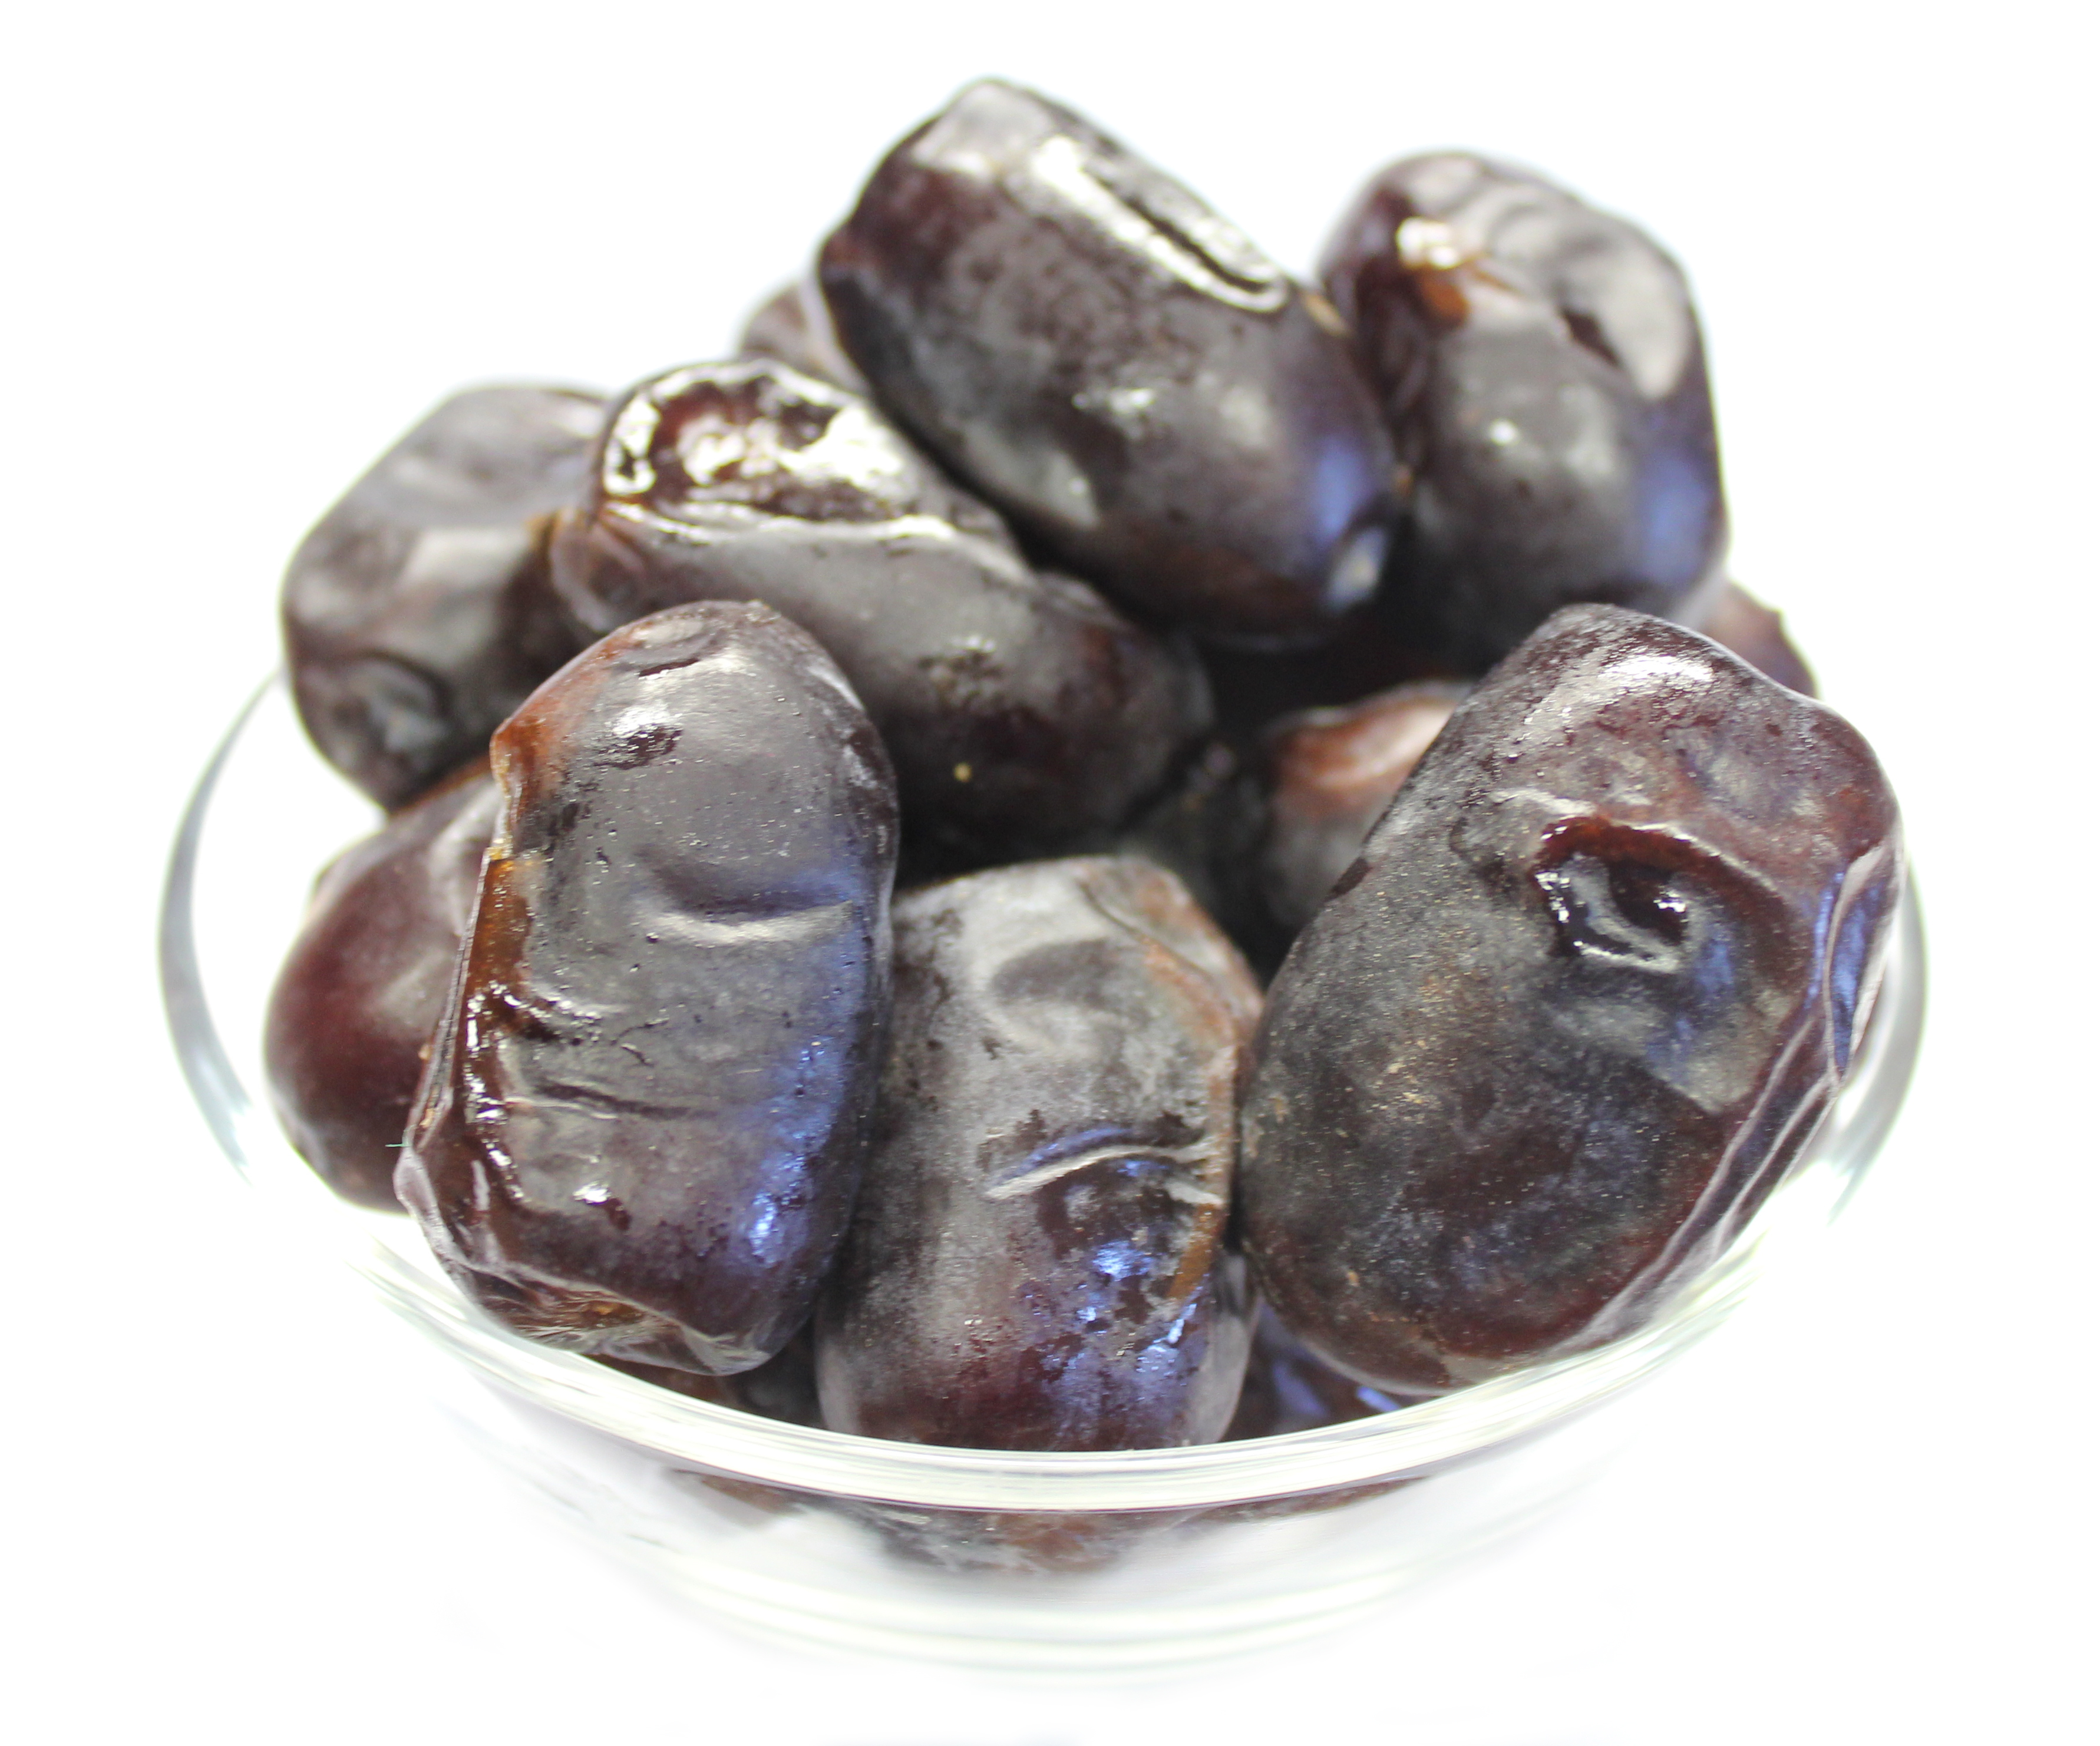 buy natural mazafati dried dates in bulk